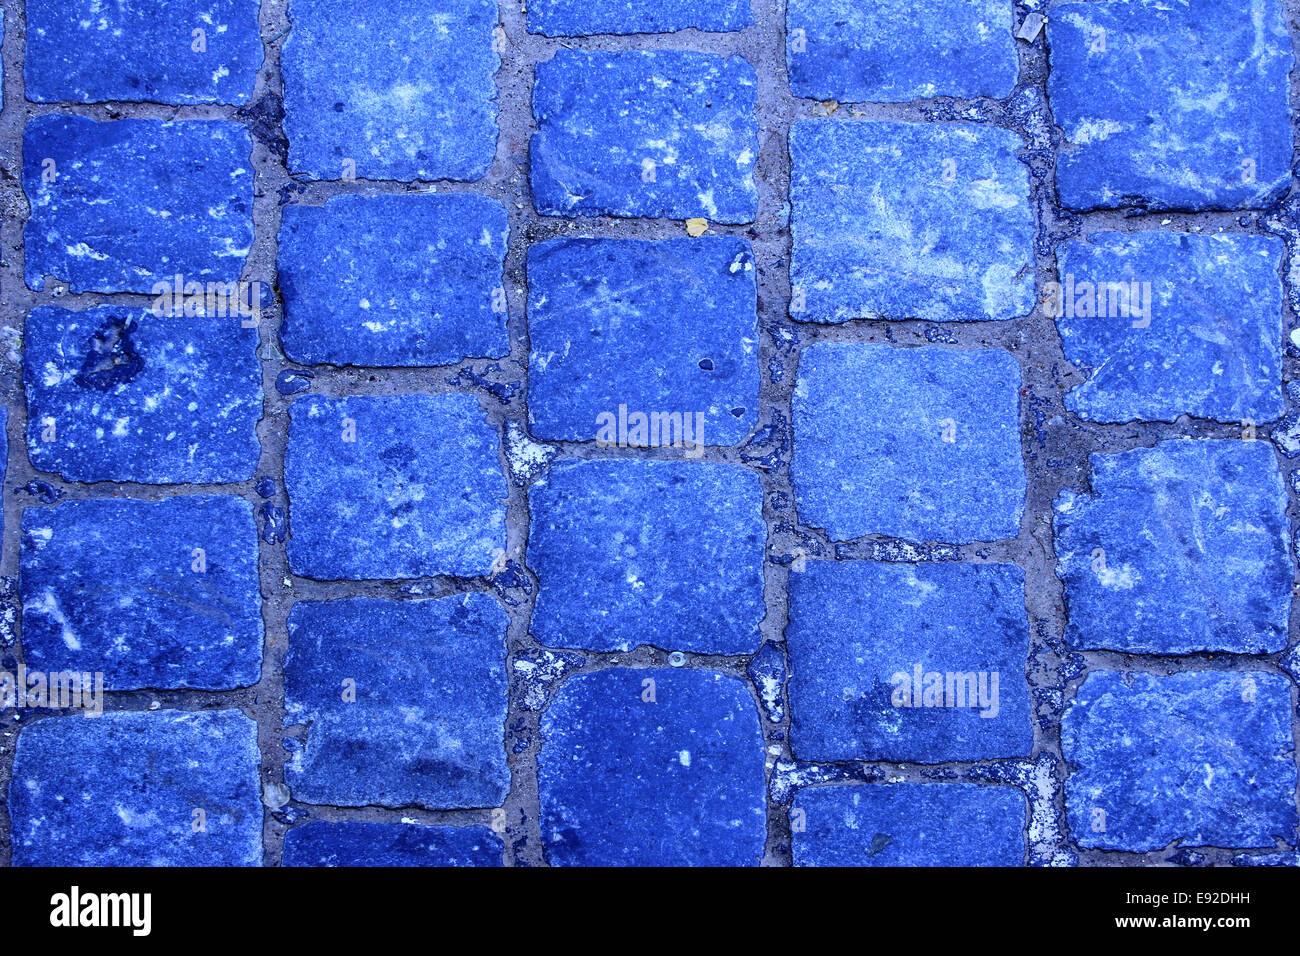 blue paving stones Stock Photo